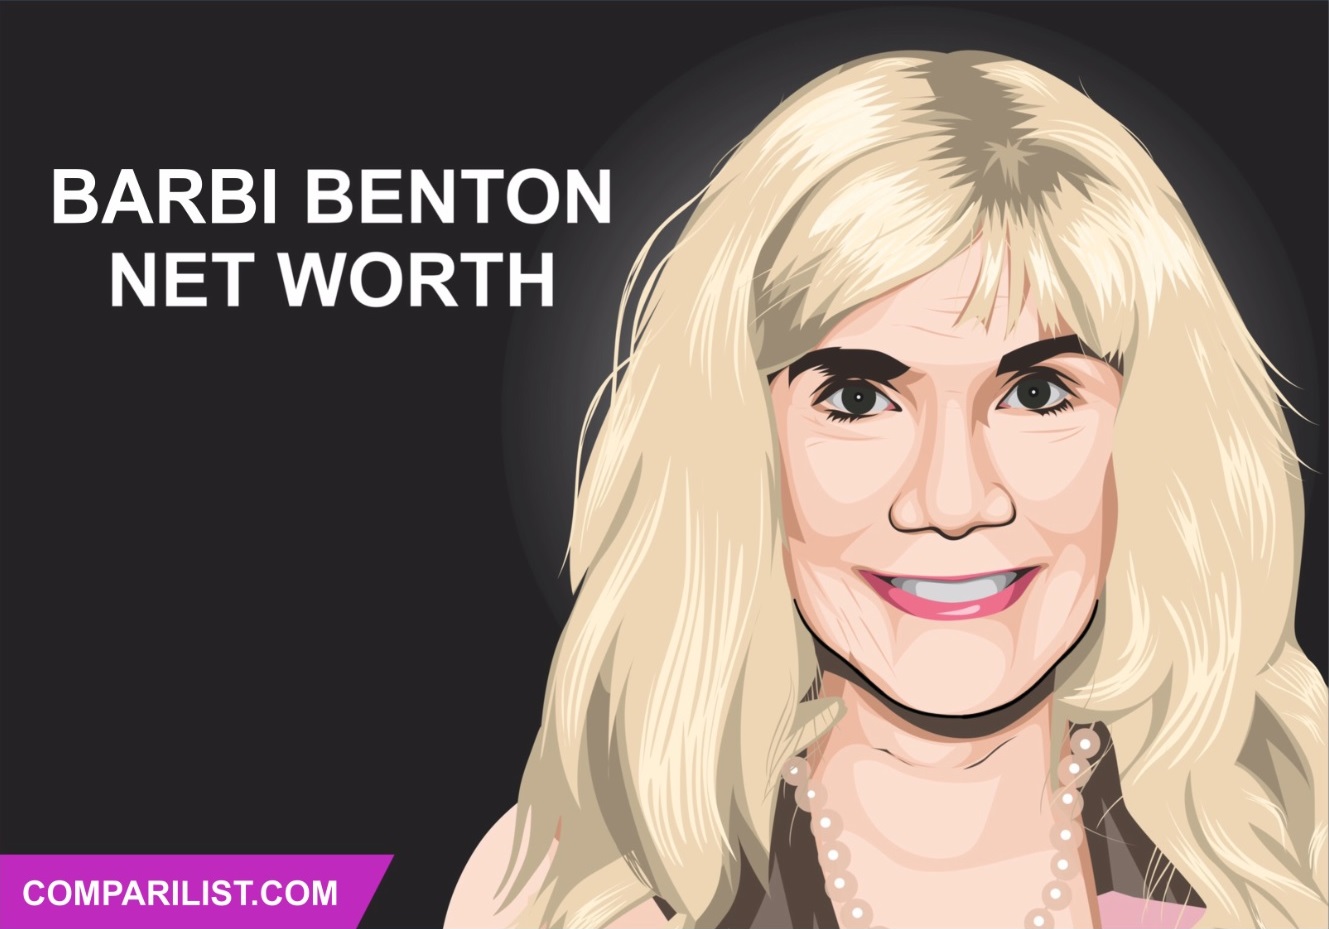 Benton now barbi images Barbi Benton